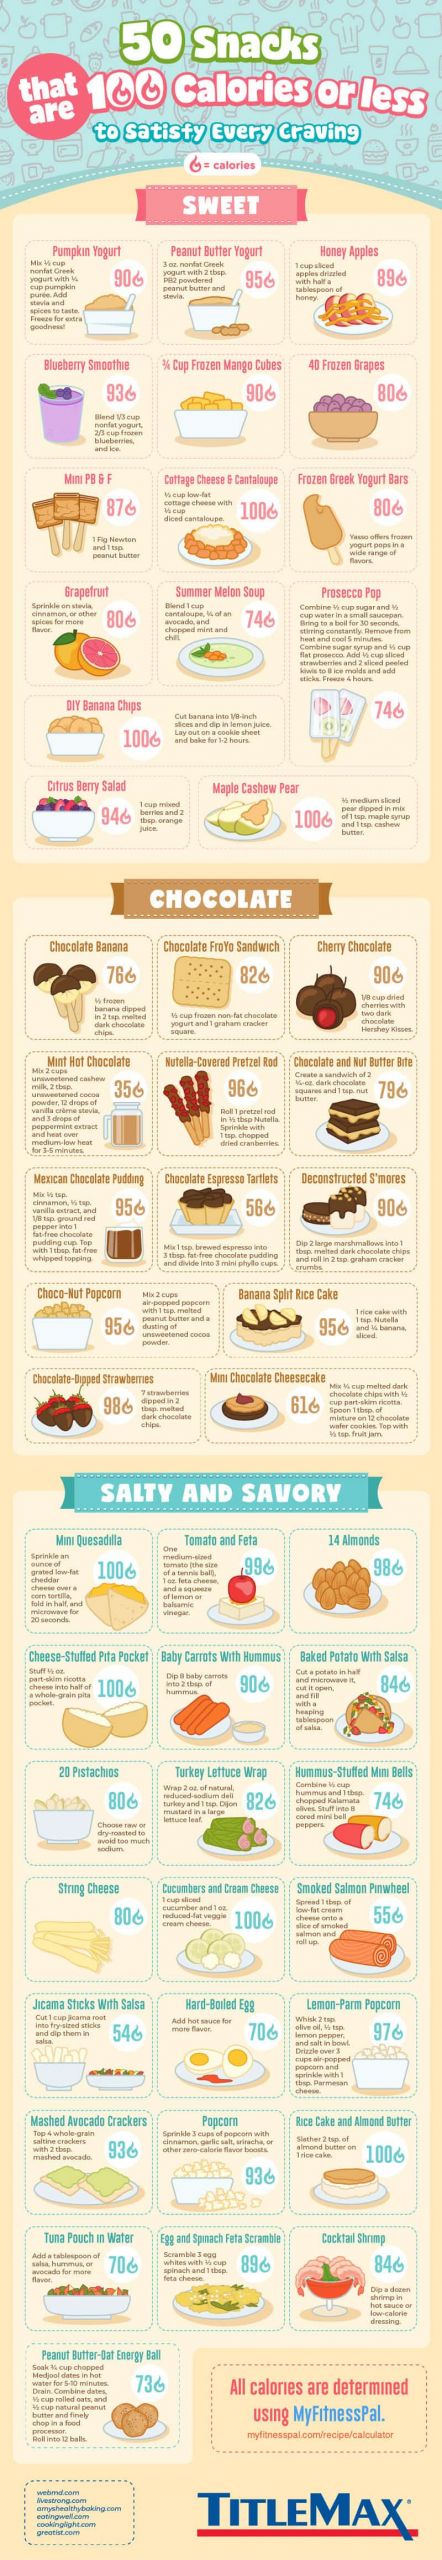 100 Calorie Snacks List
 50 Health Conscious Snacks That Are Under 100 Calories